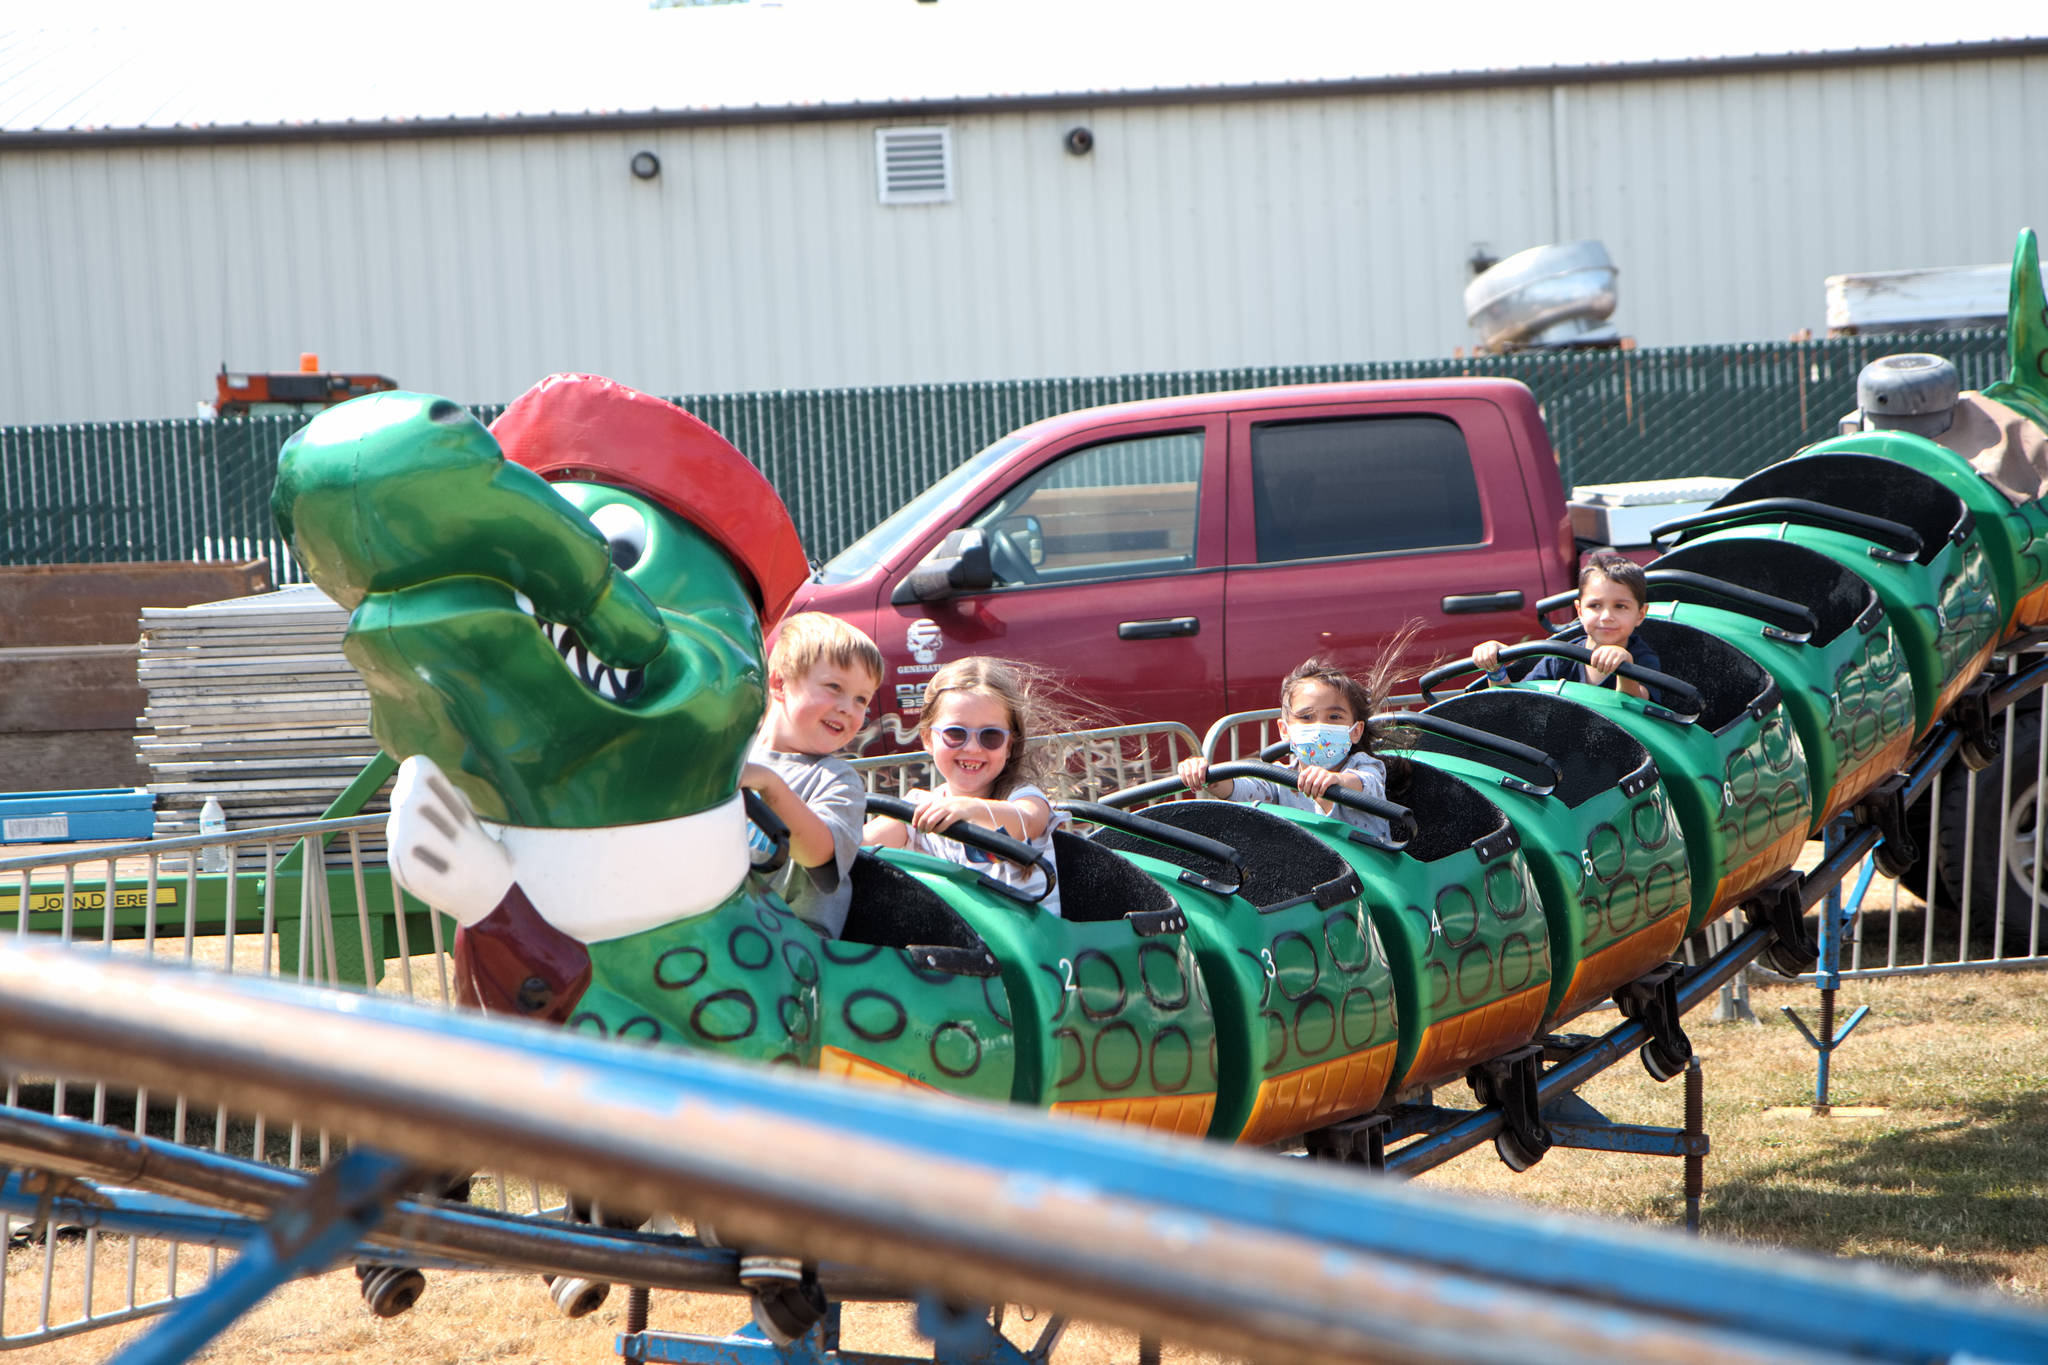 RYAN SPARKS | THE DAILY WORLD Fair attendees ride the Go Gator roller coaster on Thursday at the Grays Harbor County Fair in Elma.